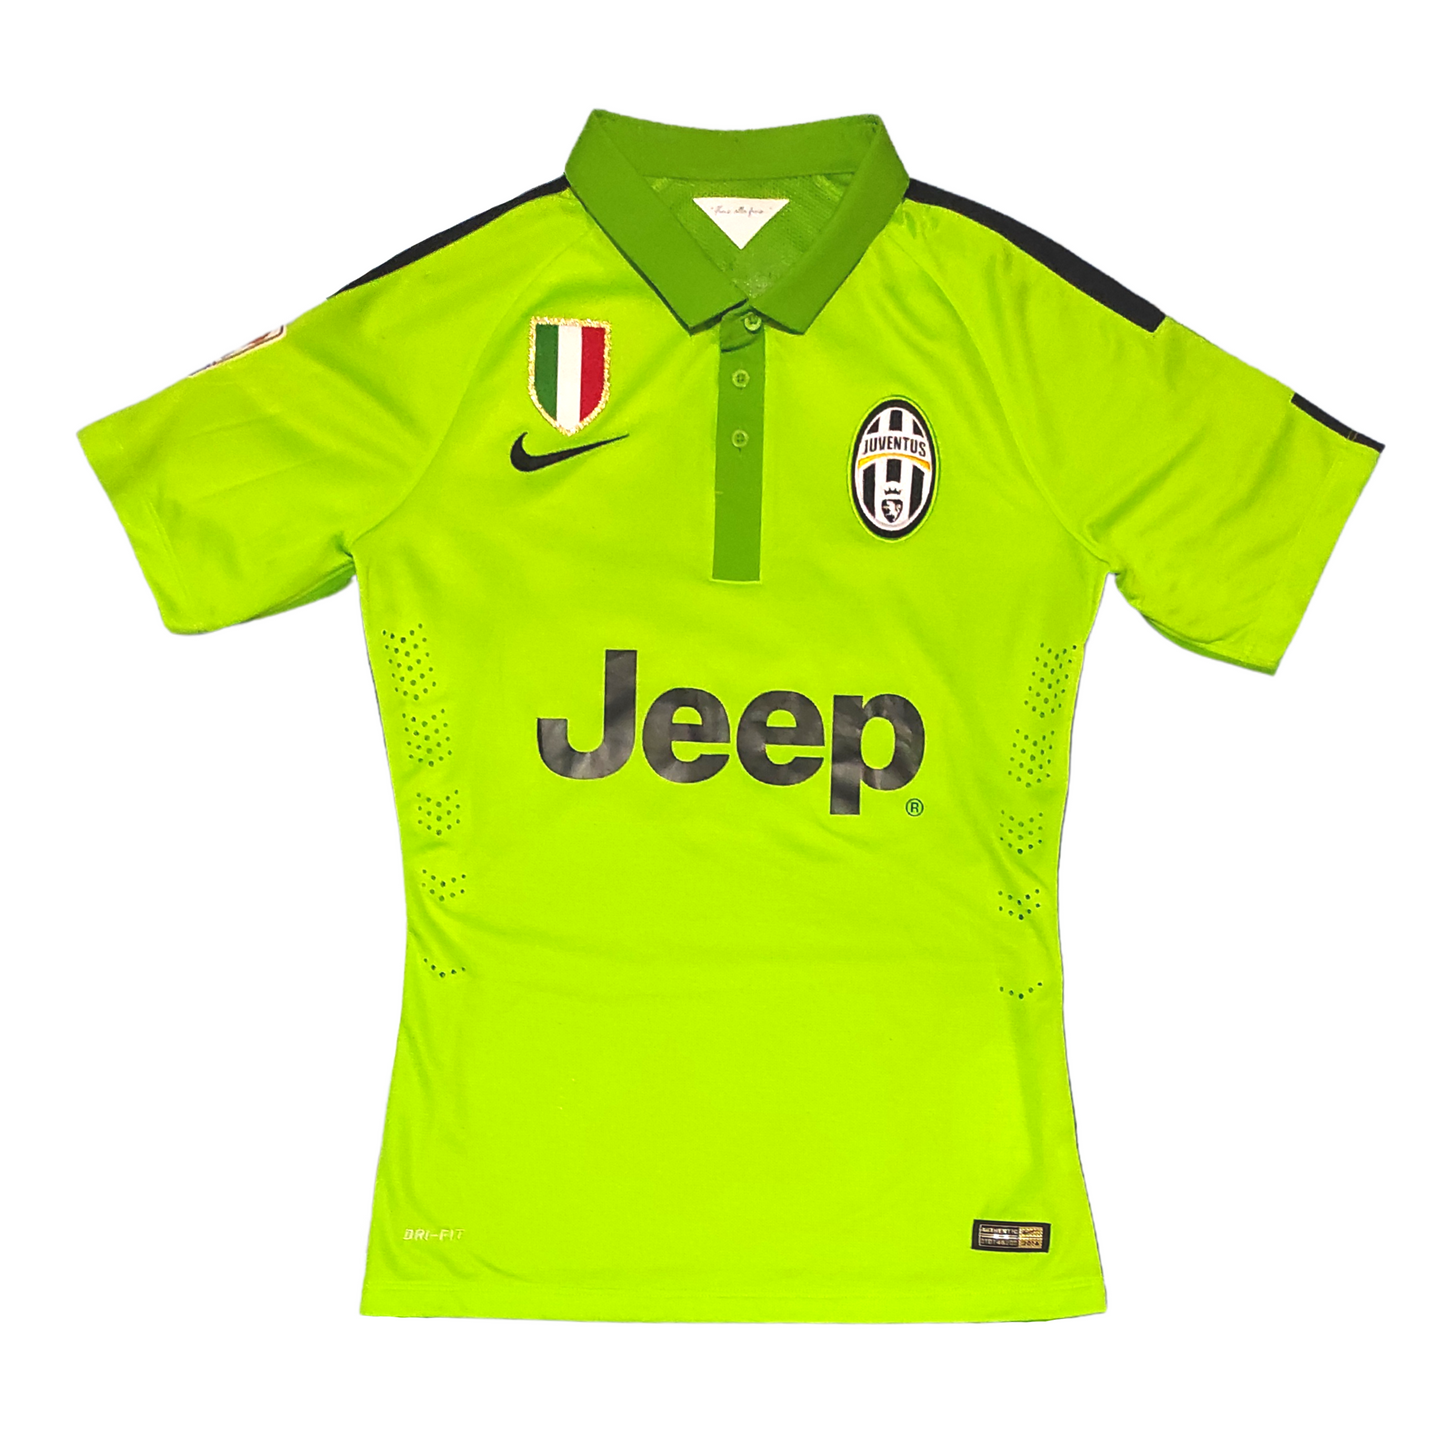 Juventus Third Player Issue Shirt 2014-2015 Pirlo (M)